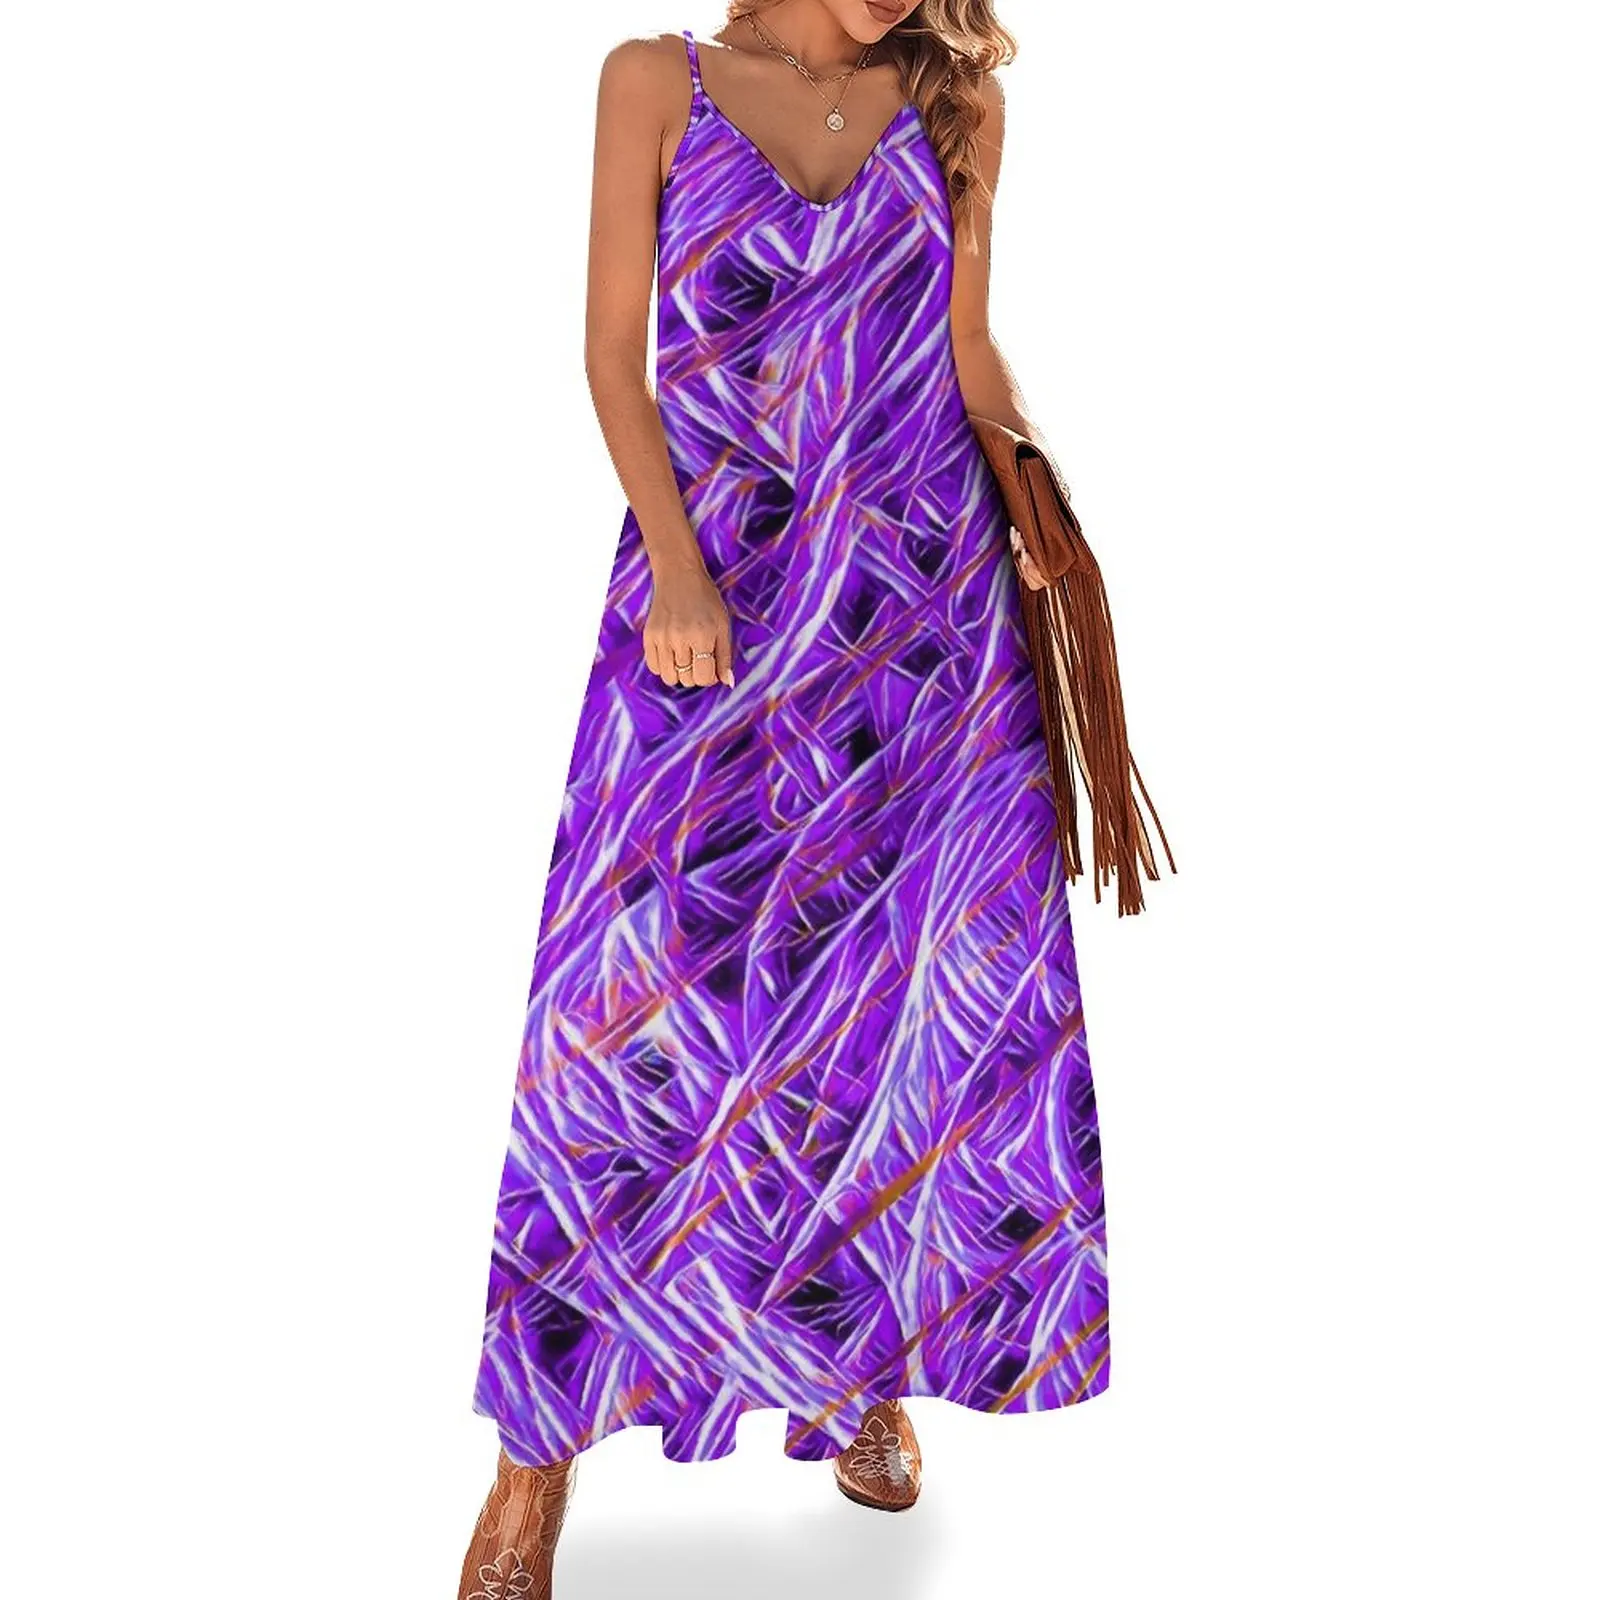 

Purple and Orange Stretch Sleeveless Dress Evening gown purple dress